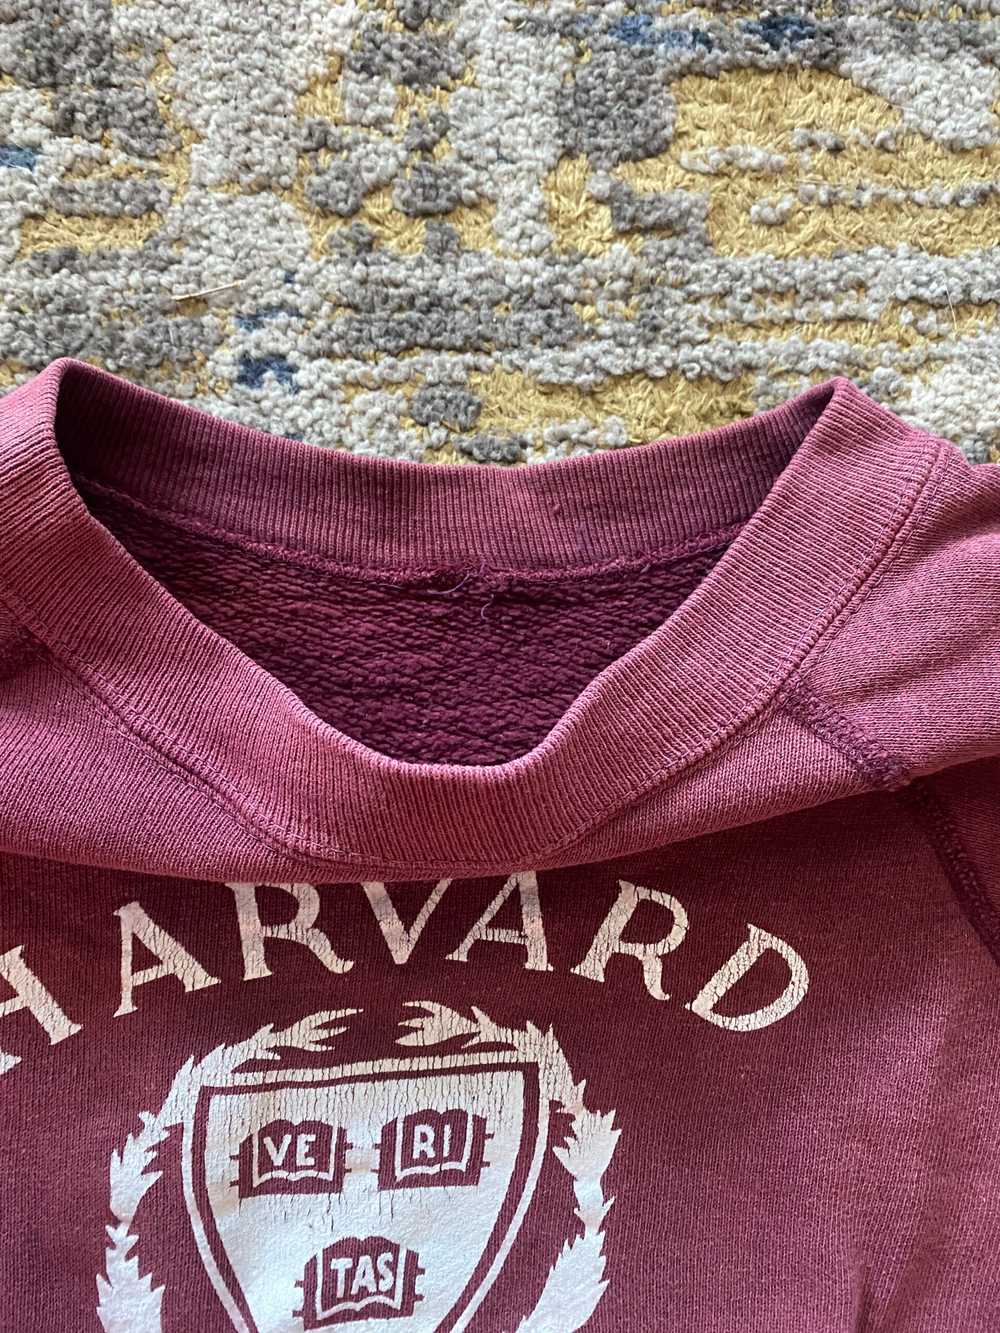 1950’s/60’s maroon Harvard sweatshirt - image 4